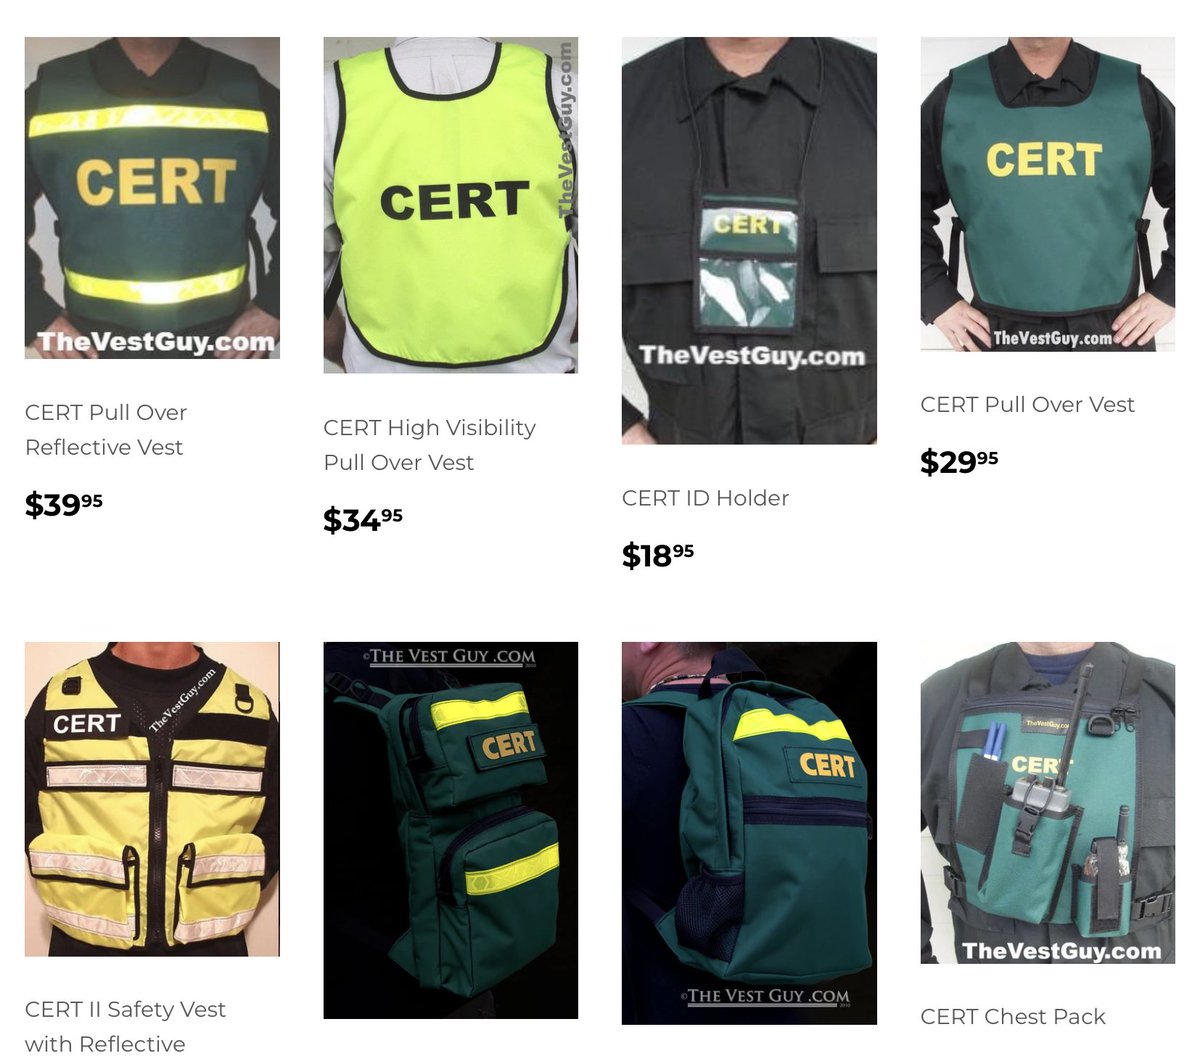 CERT Chest Pack Reflective Vest, Chest Pack Cert Gear Reflective Cert 